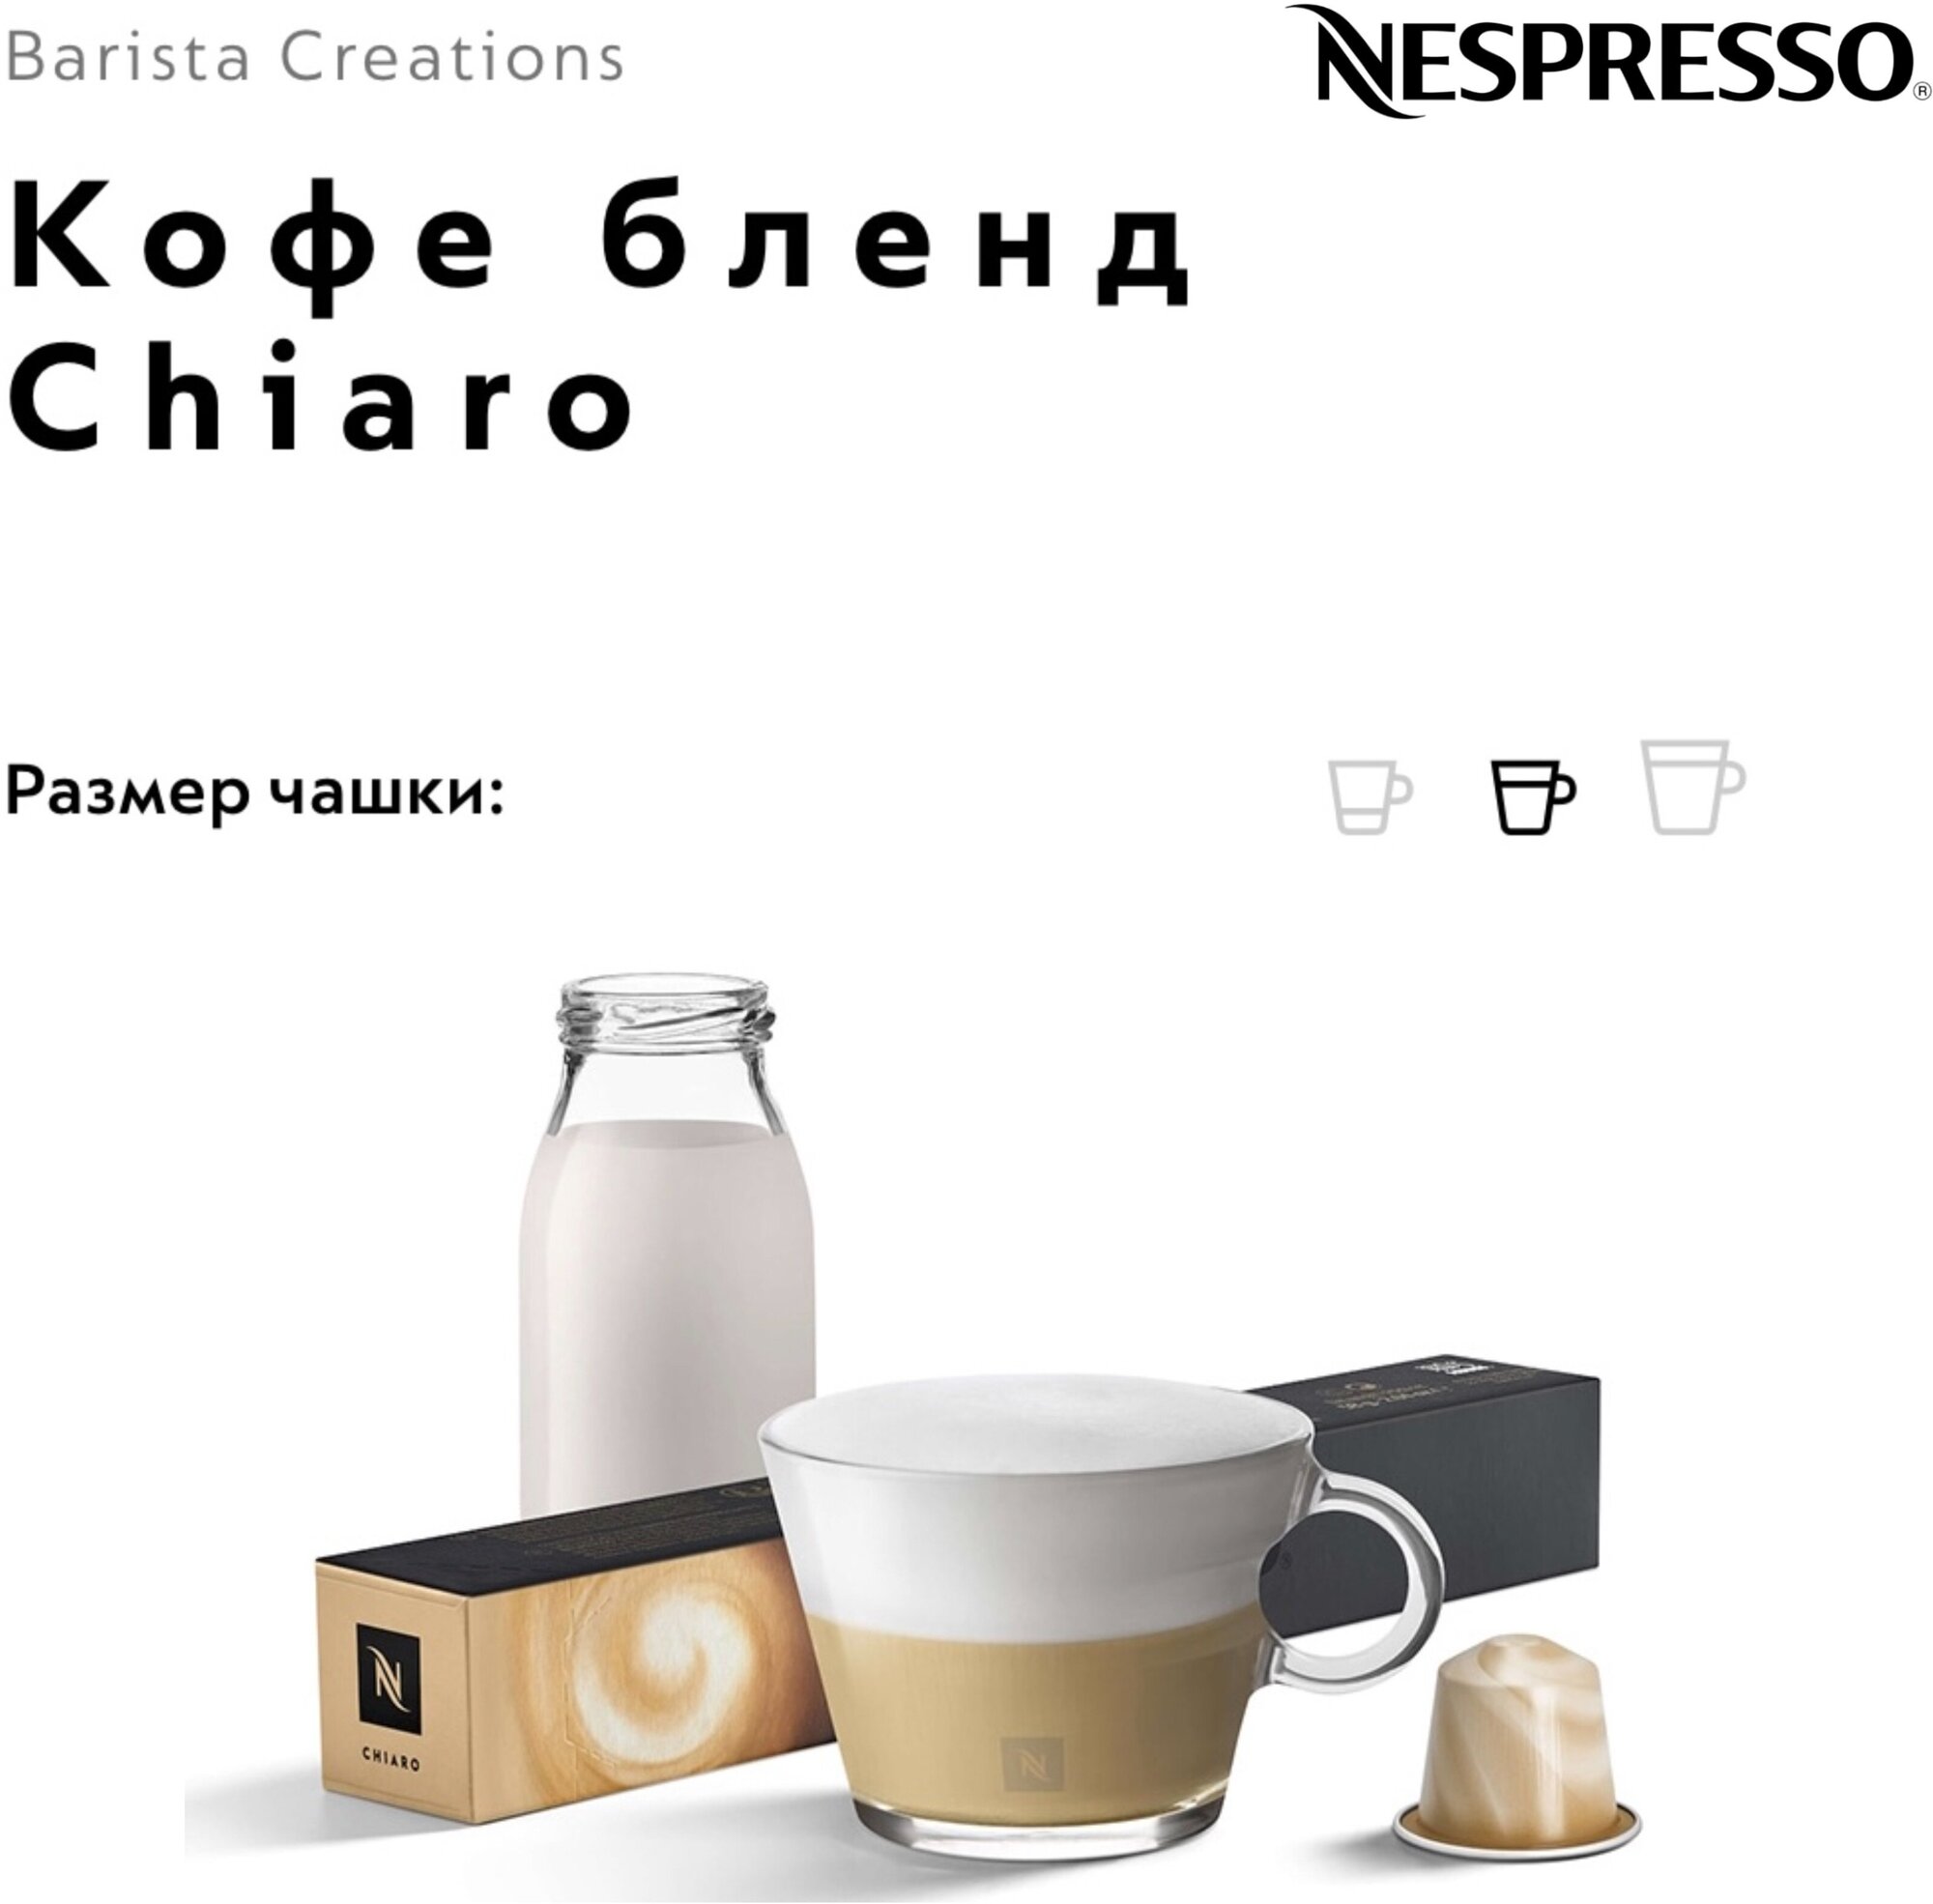 Кофе в капсулах NESPRESSO Barista Chiaro 40 ml - упаковка из 10 капсул